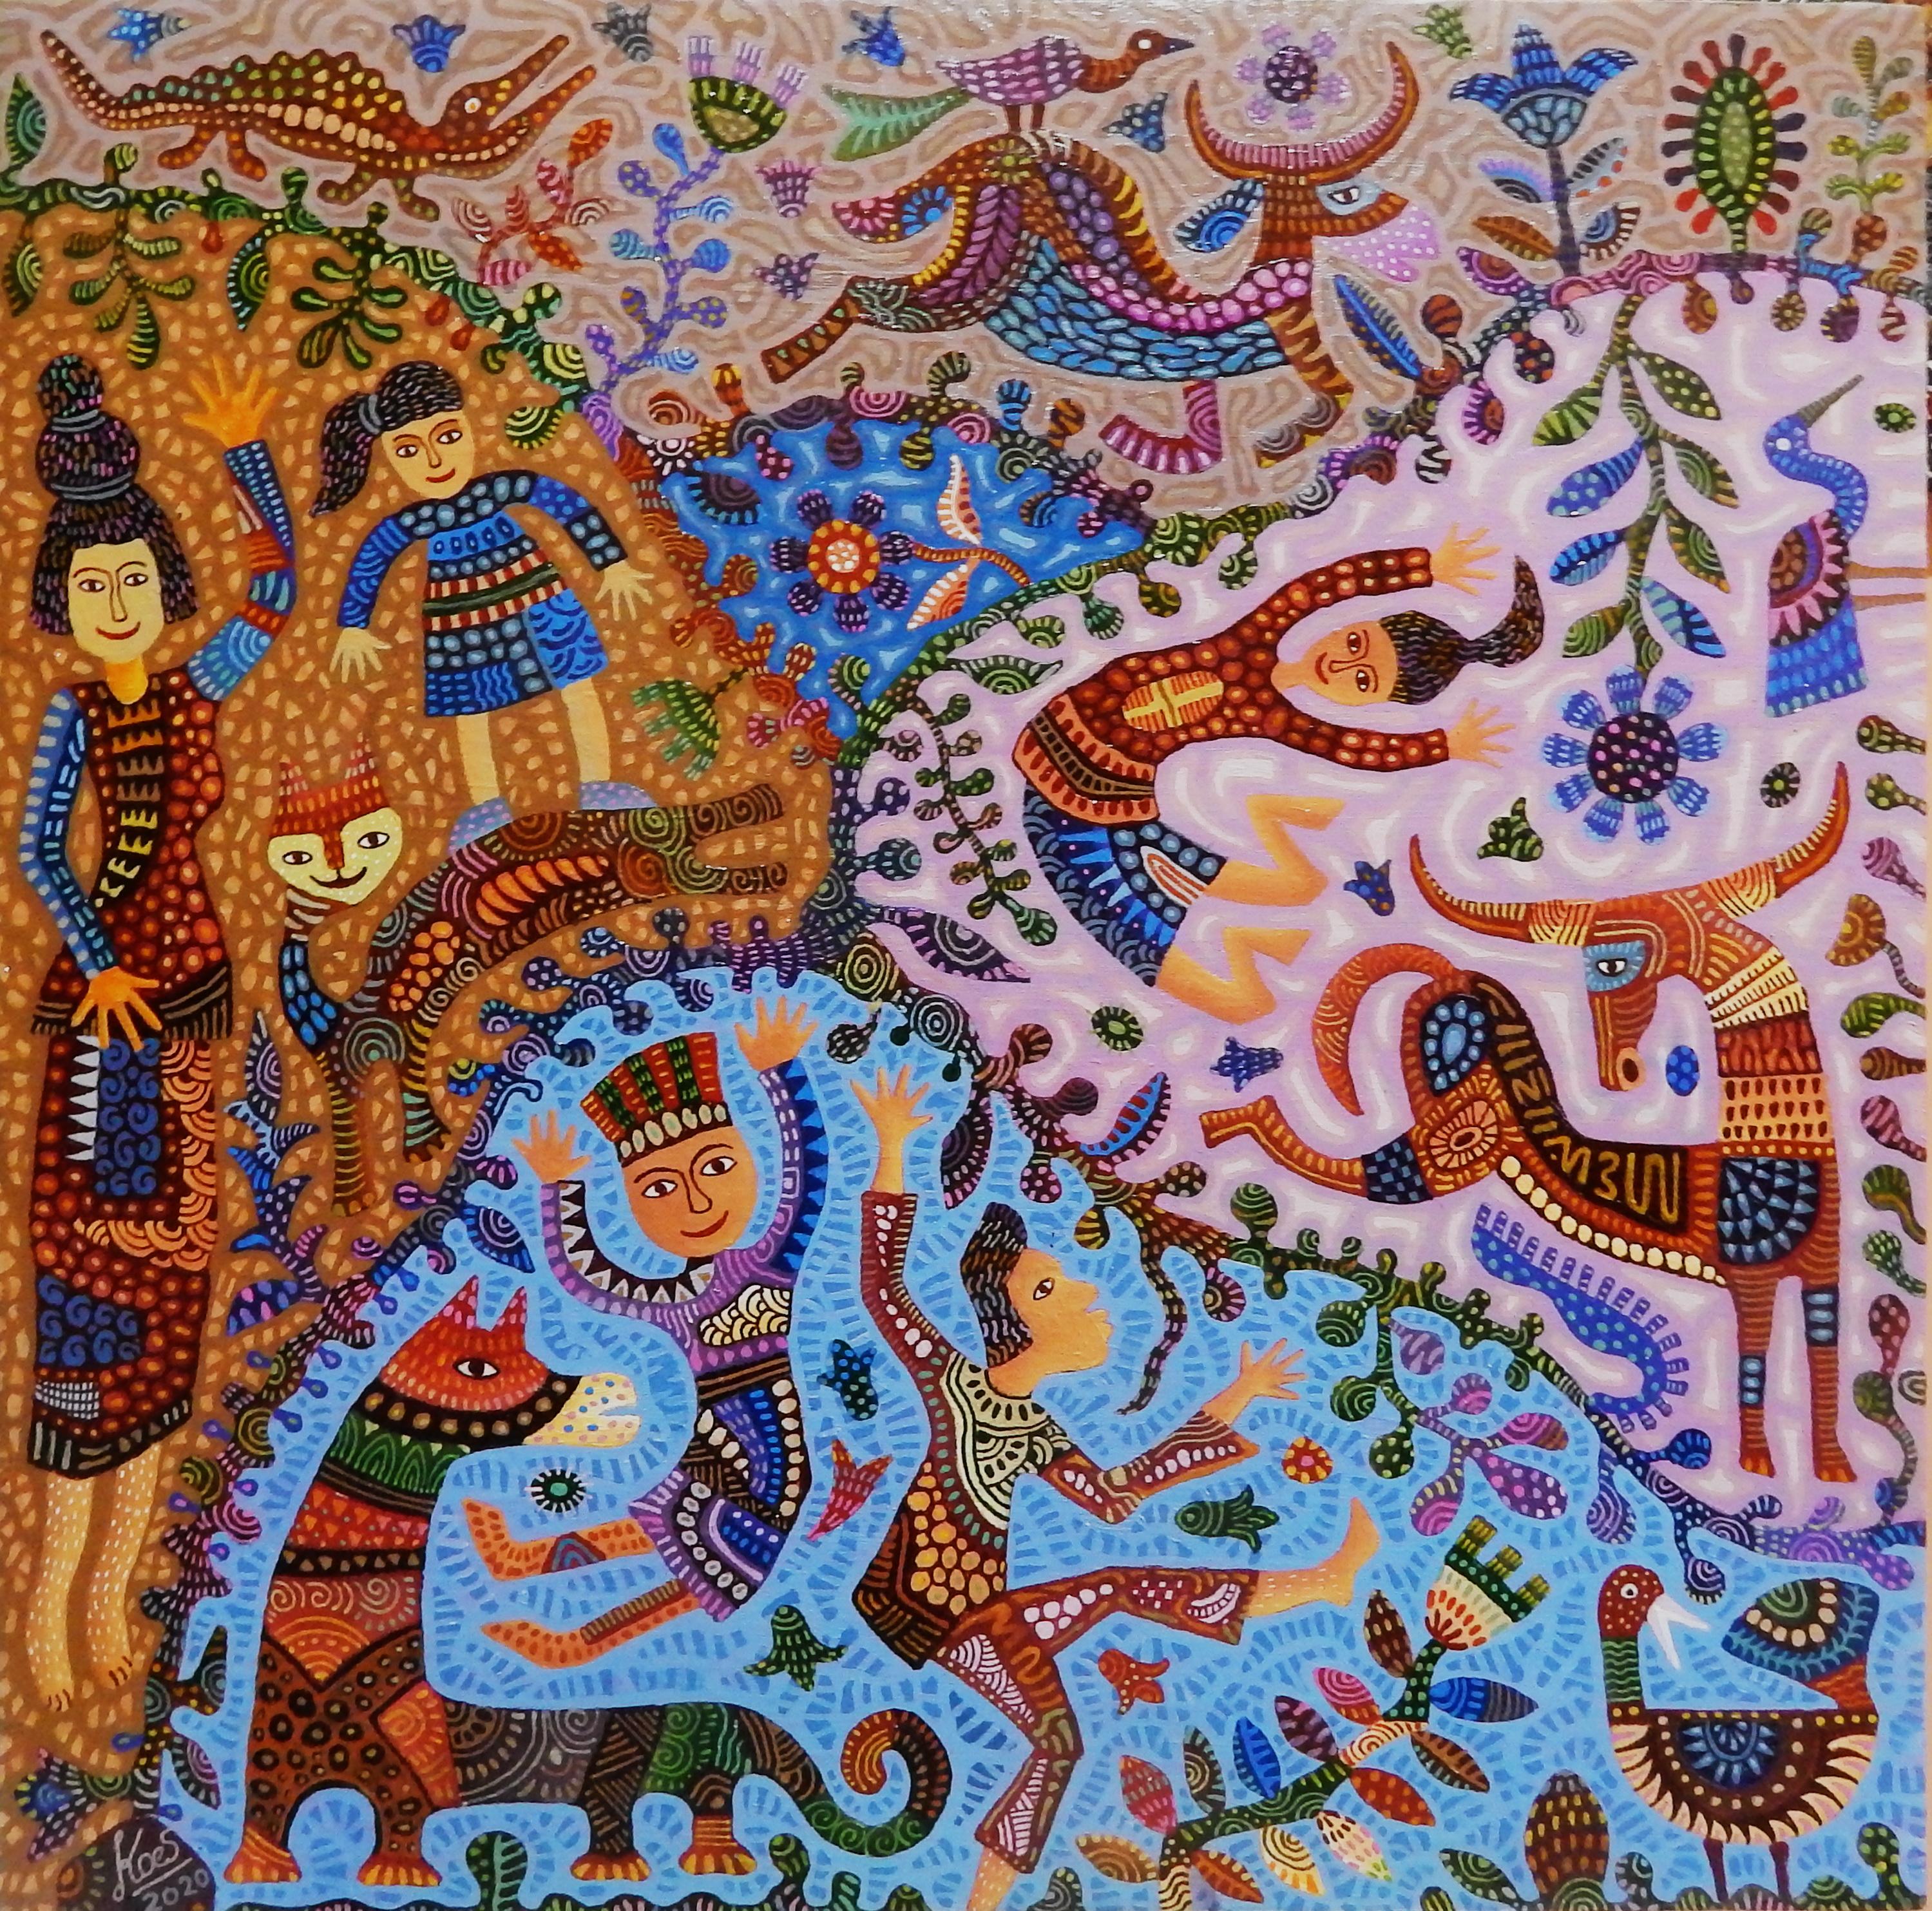 indonesian artist painting